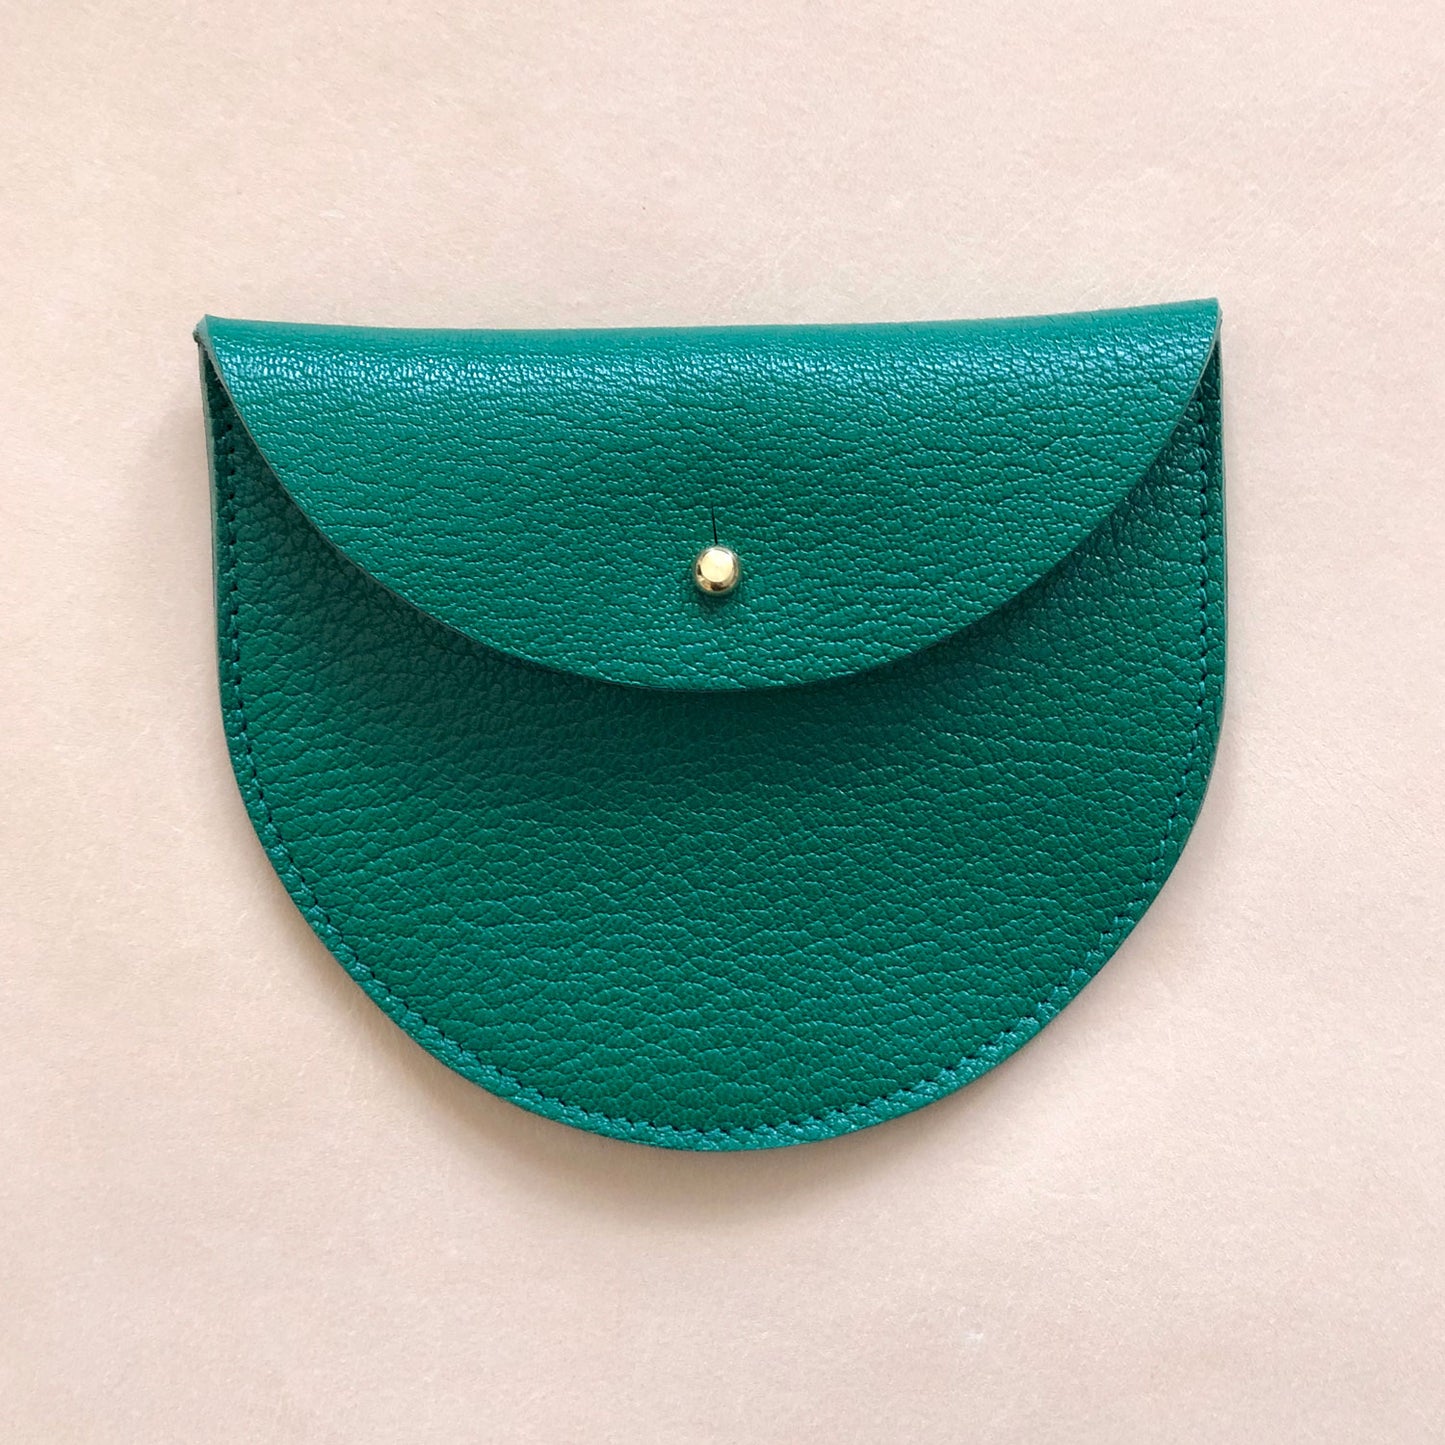 Handmade leather purse - Green